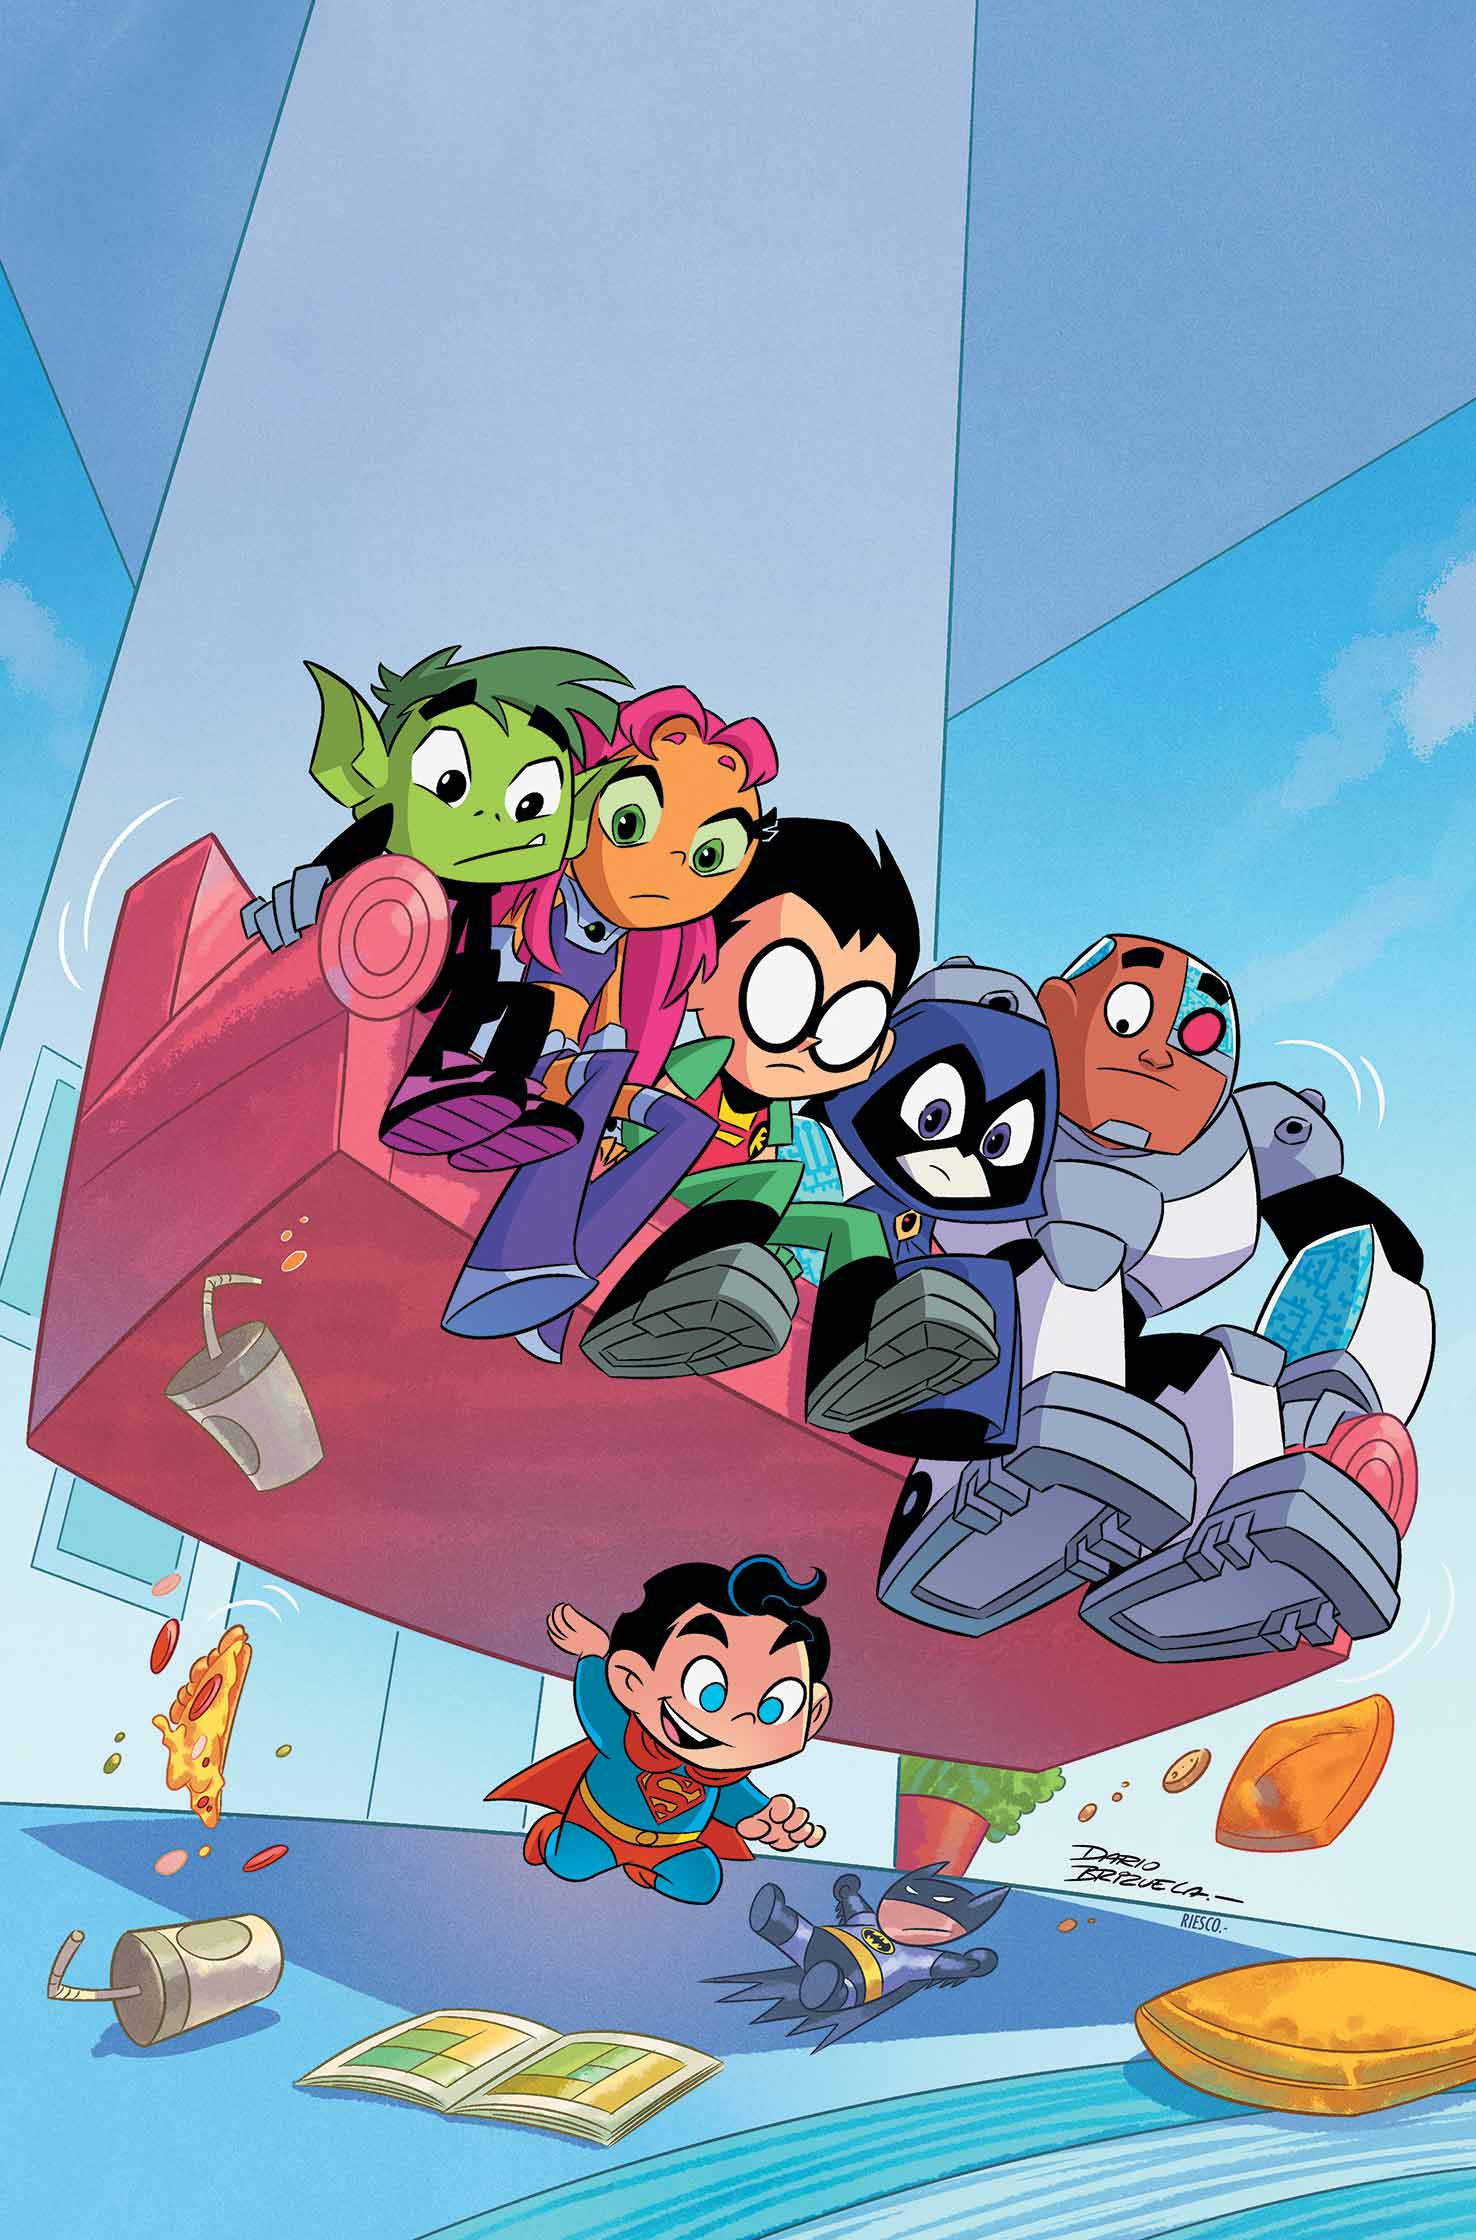 Teen Titans Go! #18 Digital Issue review | Batman News